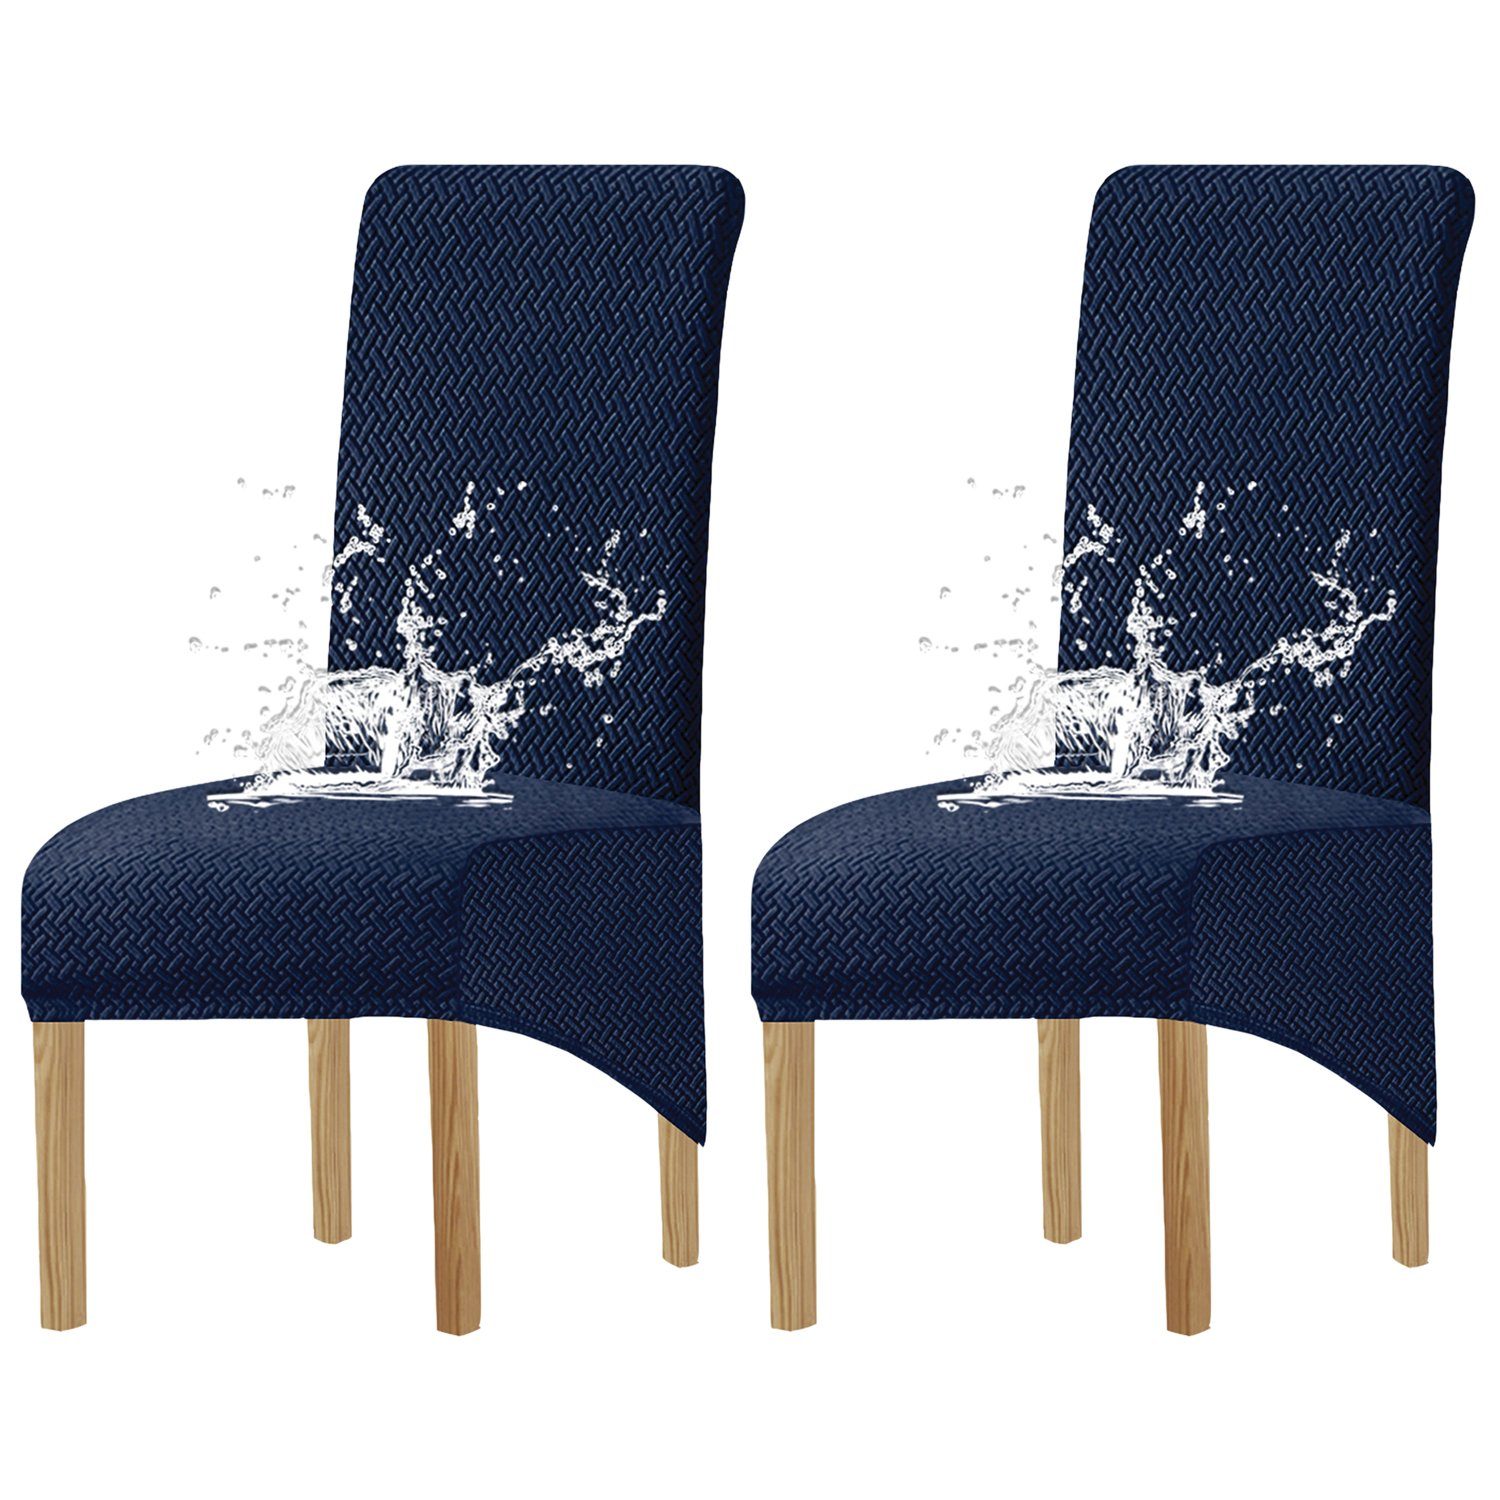 Stuhlhusse, HOMEIDEAS, Stretch Jacquard übergroß geflochtene Textur Stuhlbezug Blau